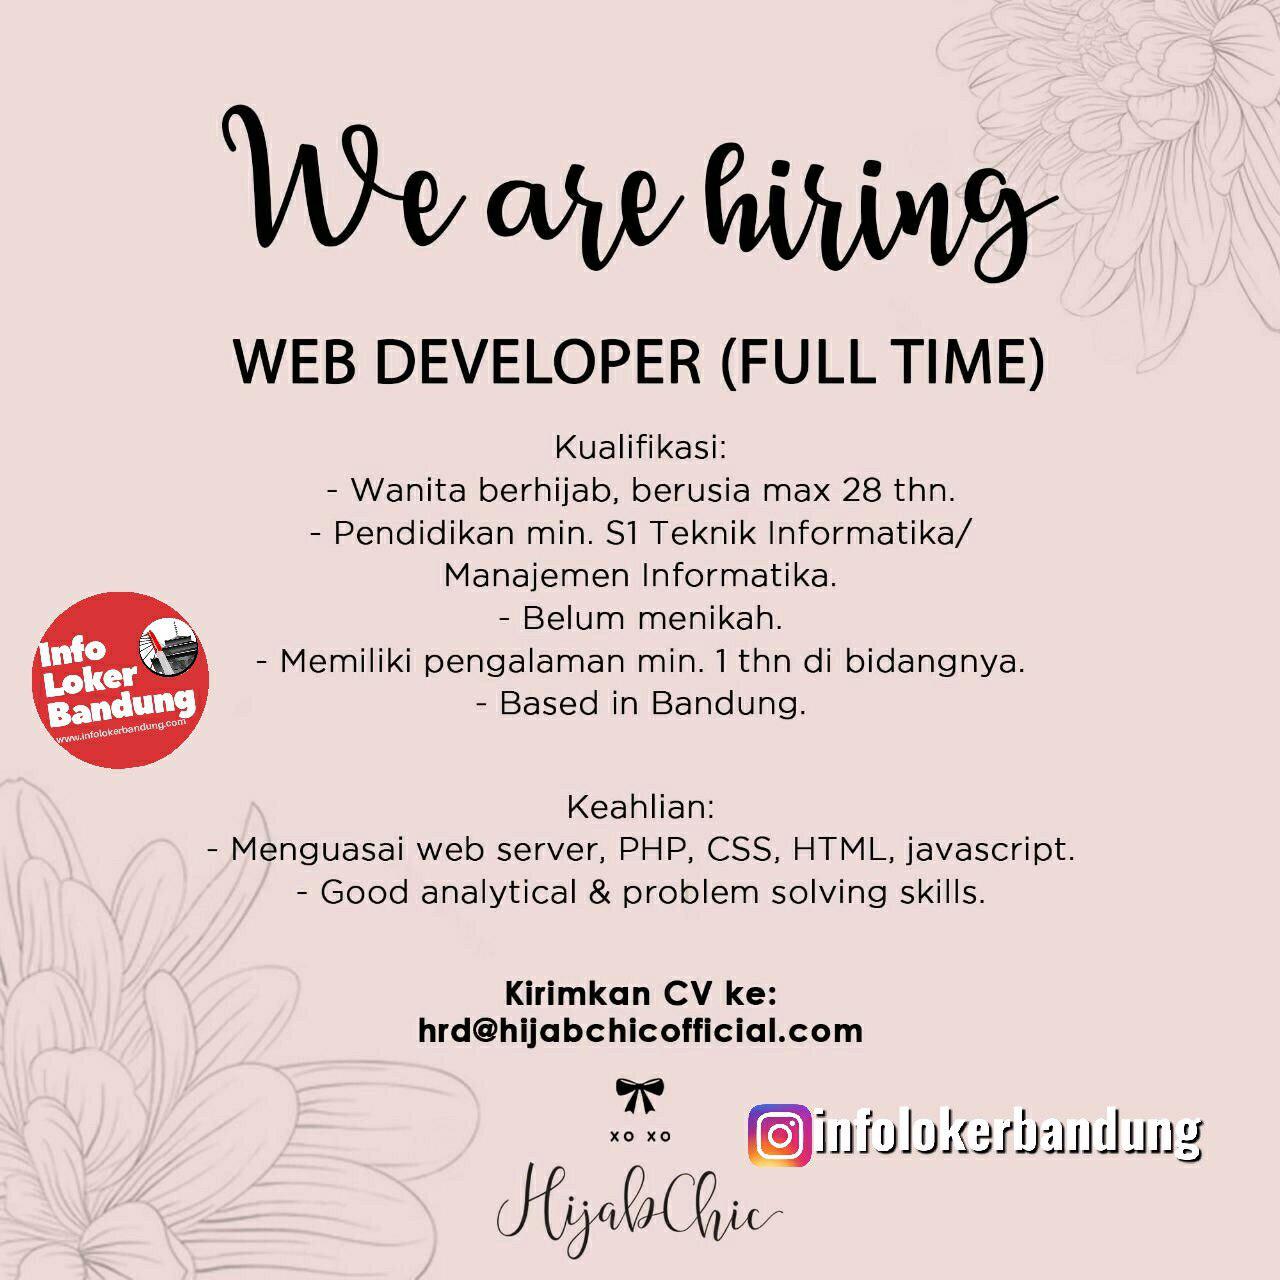 Lowongan Kerja Web Developer HijabChic Bandung Maret 2019 Info